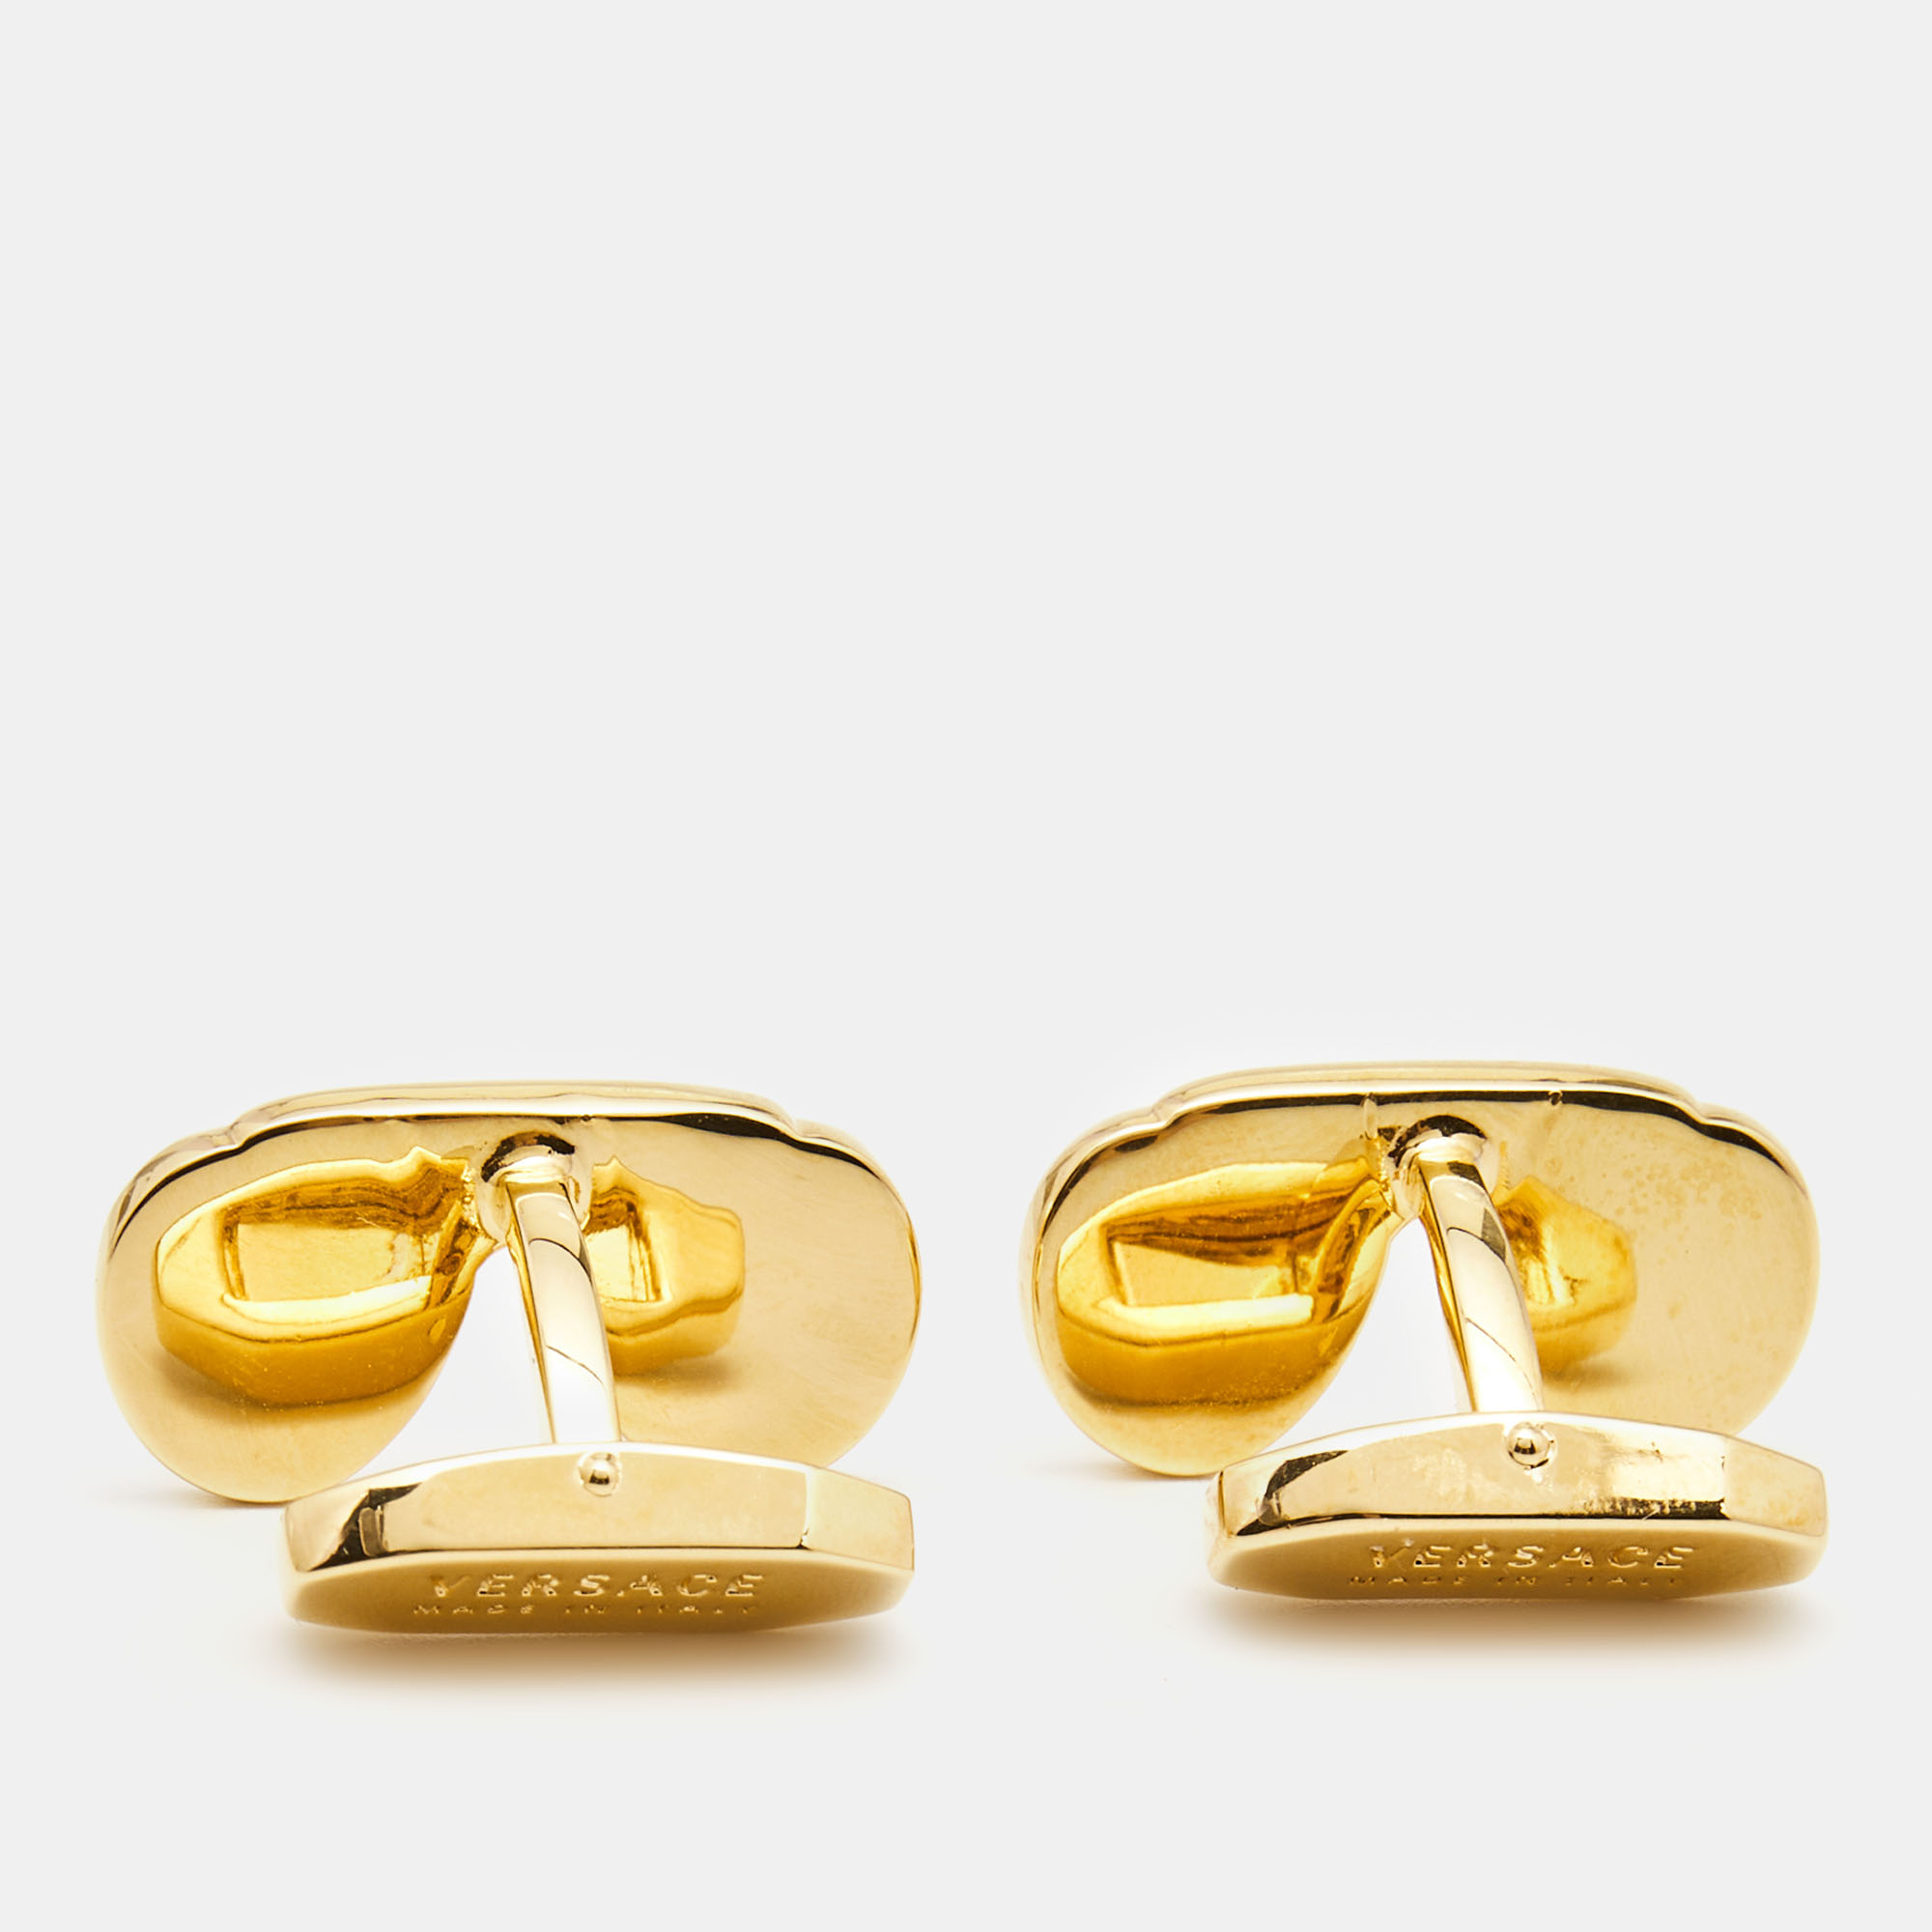 Versace Gold Tone Toggle Cufflinks